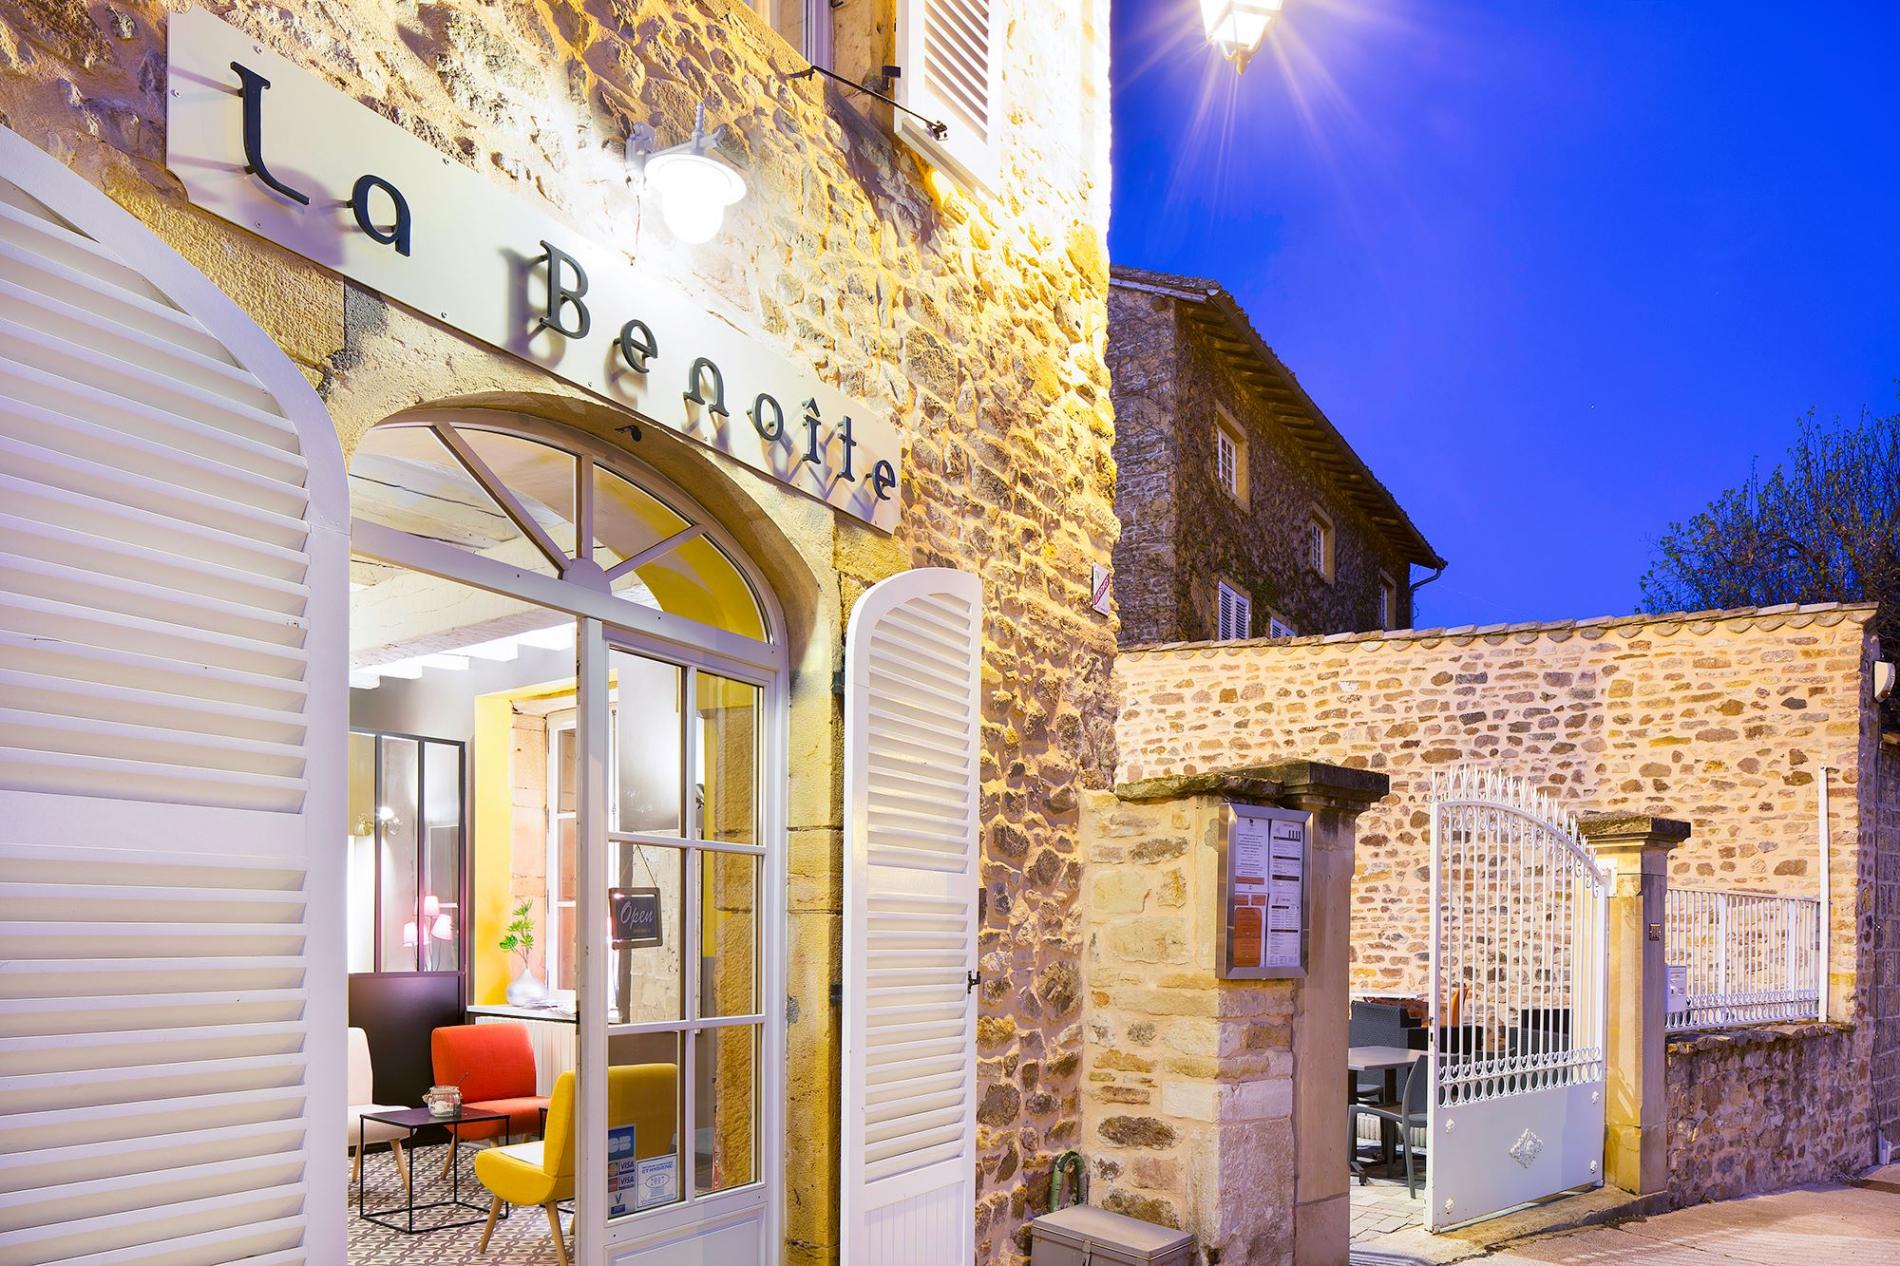 Hotel and restaurant La Benoite